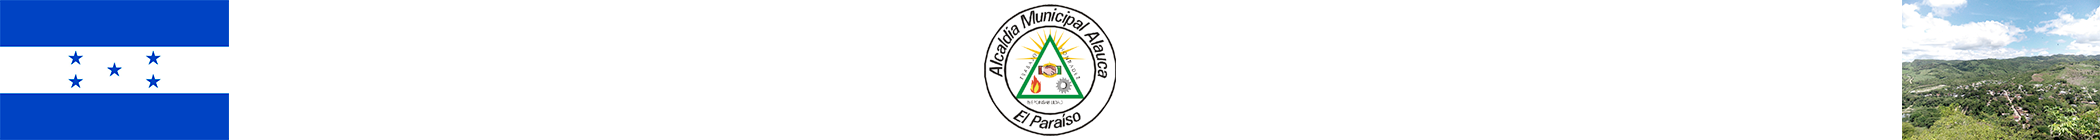 Banner Alauca